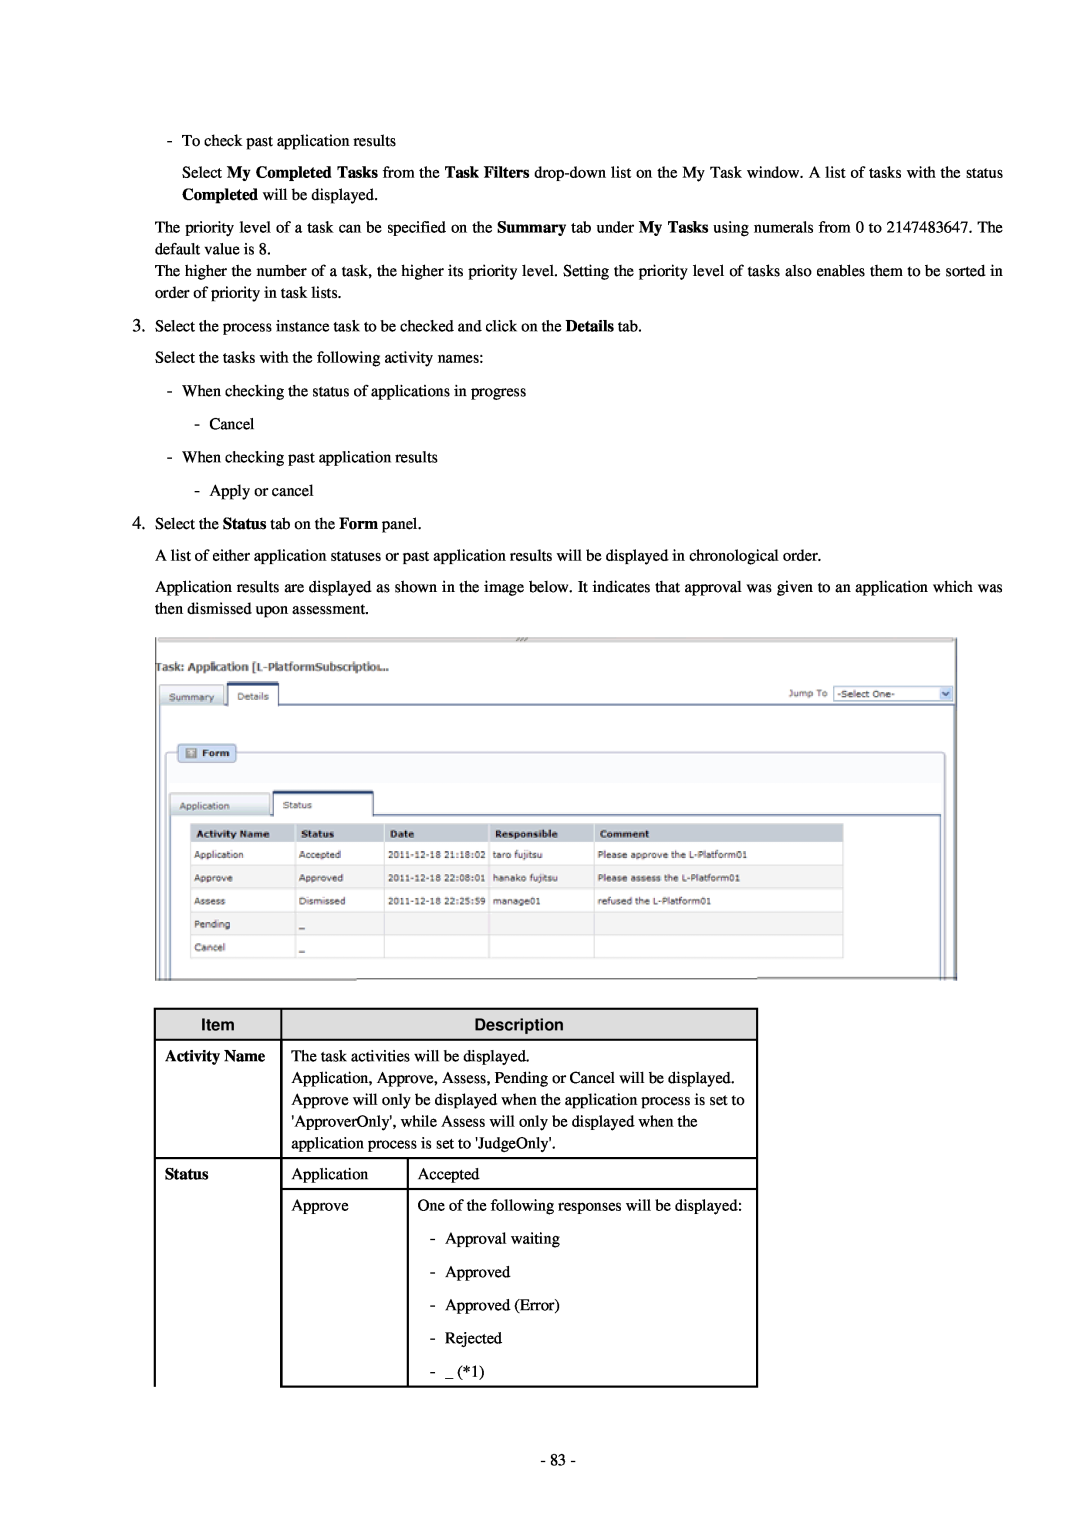 Fujitsu V3.0.0 manual Description, Activity Name, Status 